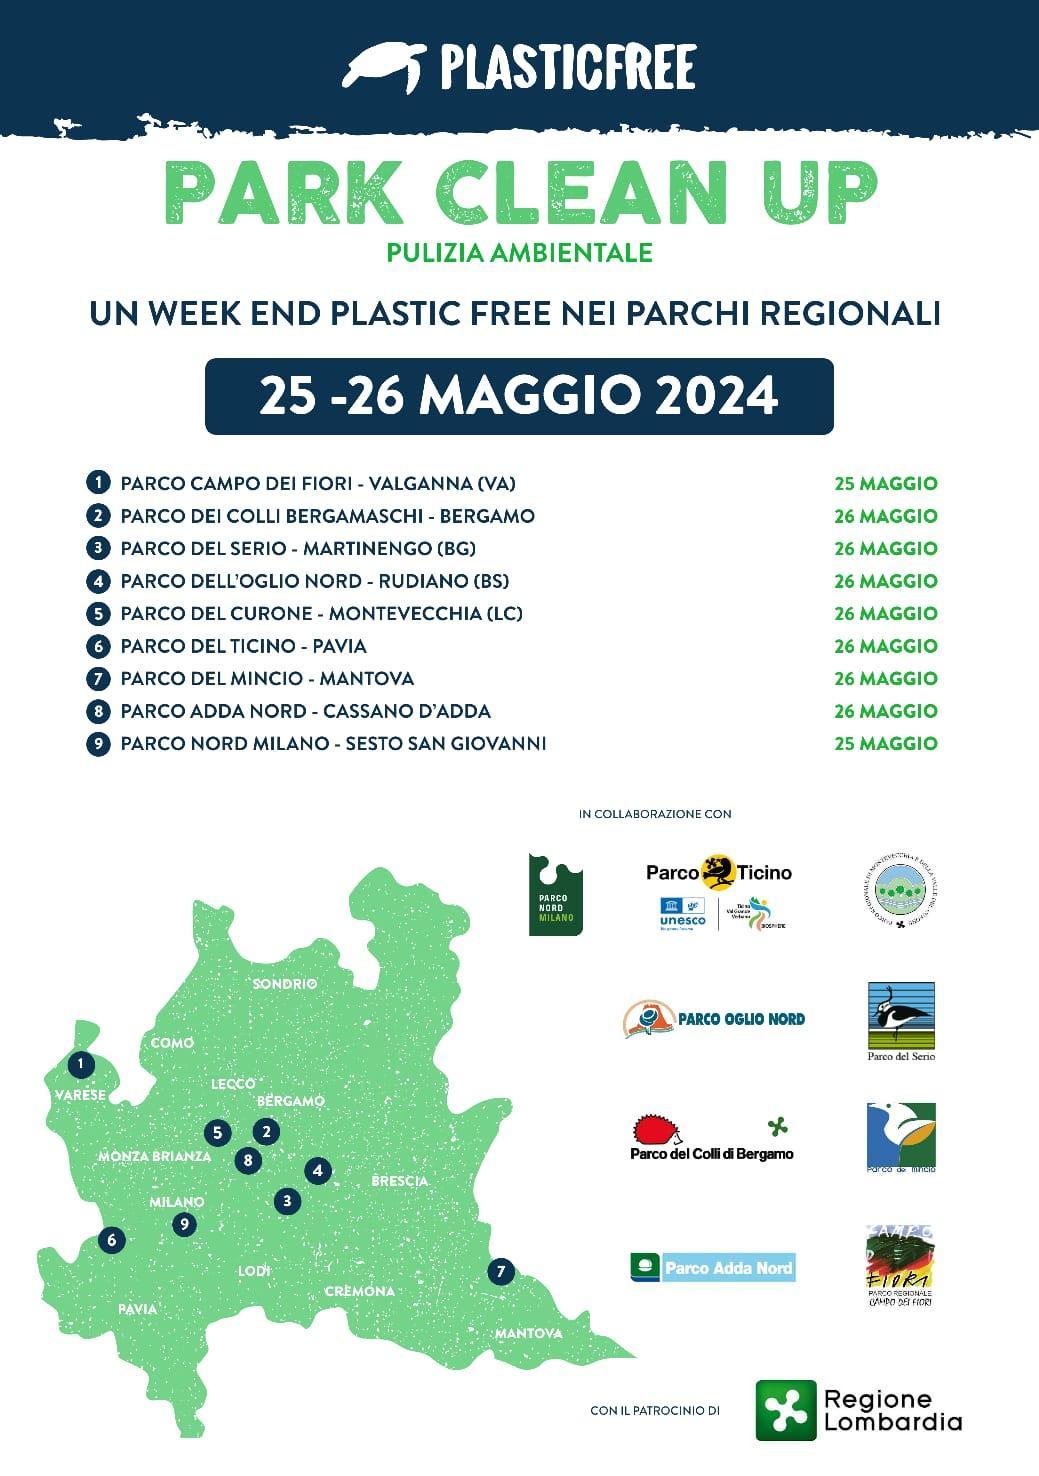 Park Clean Up in Lombardia: un weekend Plastic Free nei parchi regionali